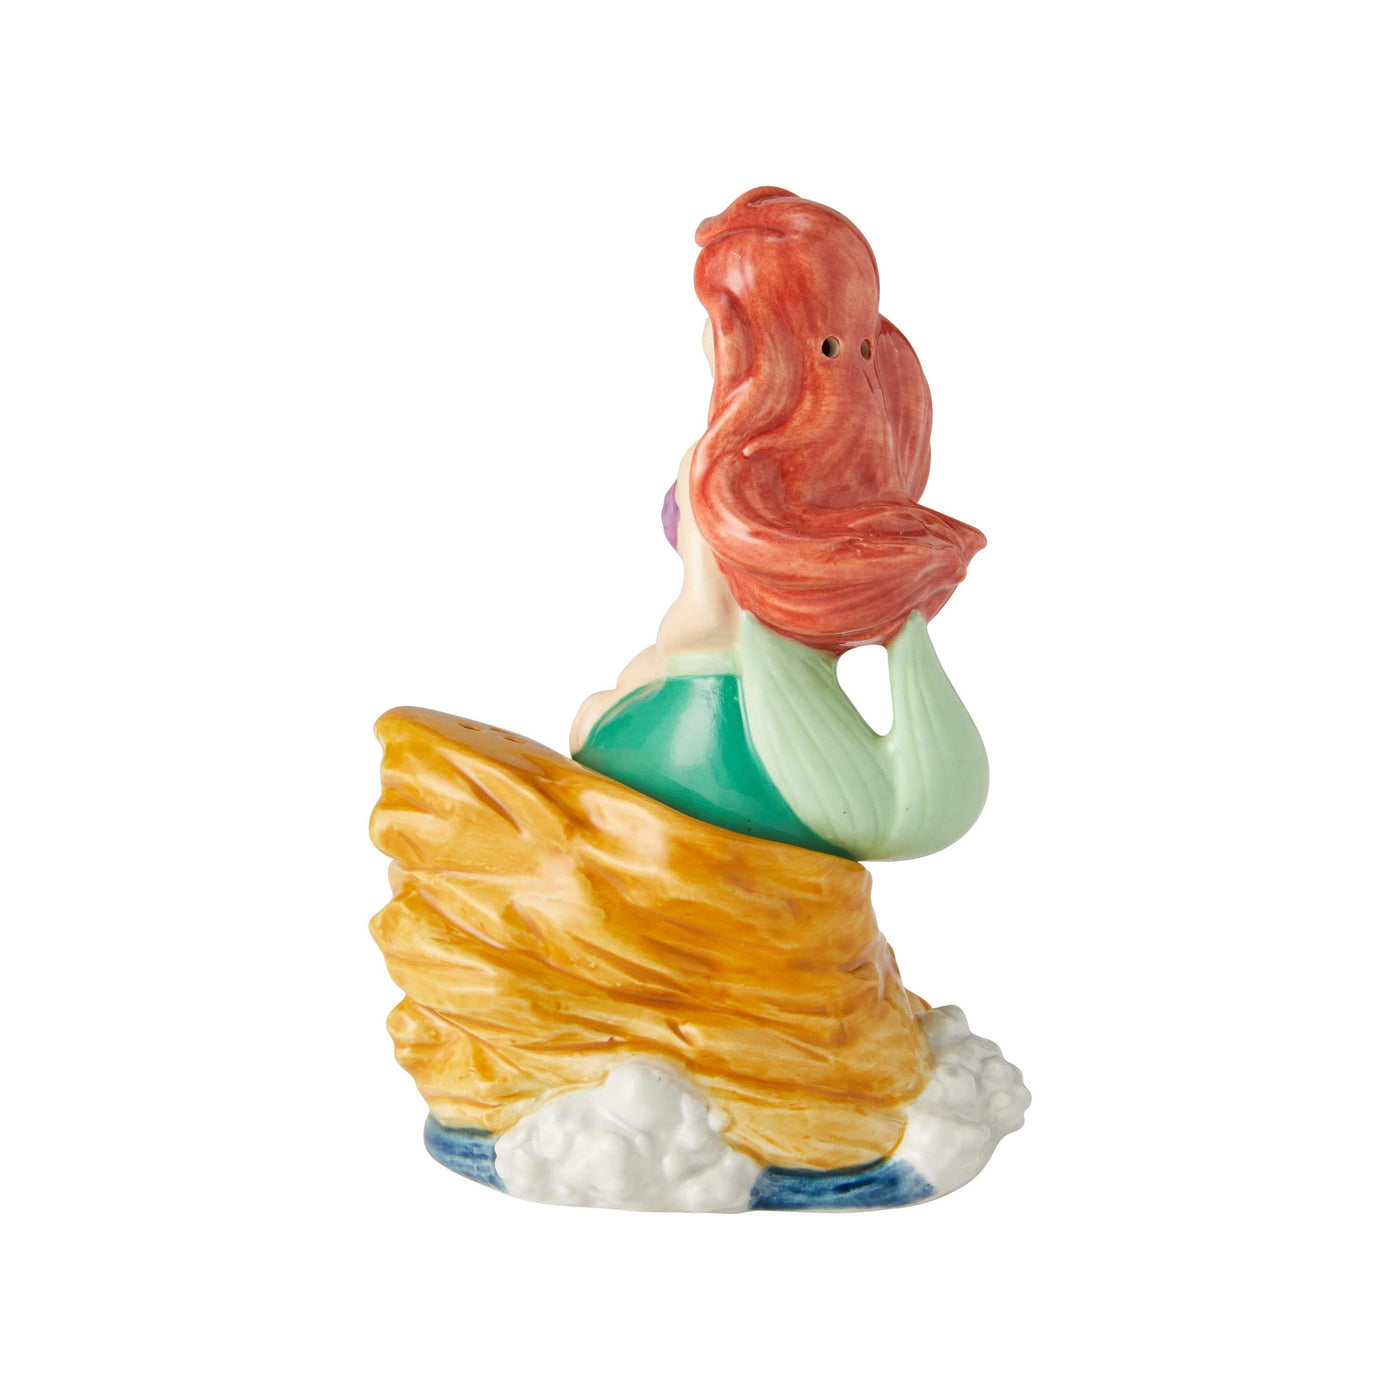 Enesco Disney Ceramics Ariel on Rock Salt & Pepper New with Box